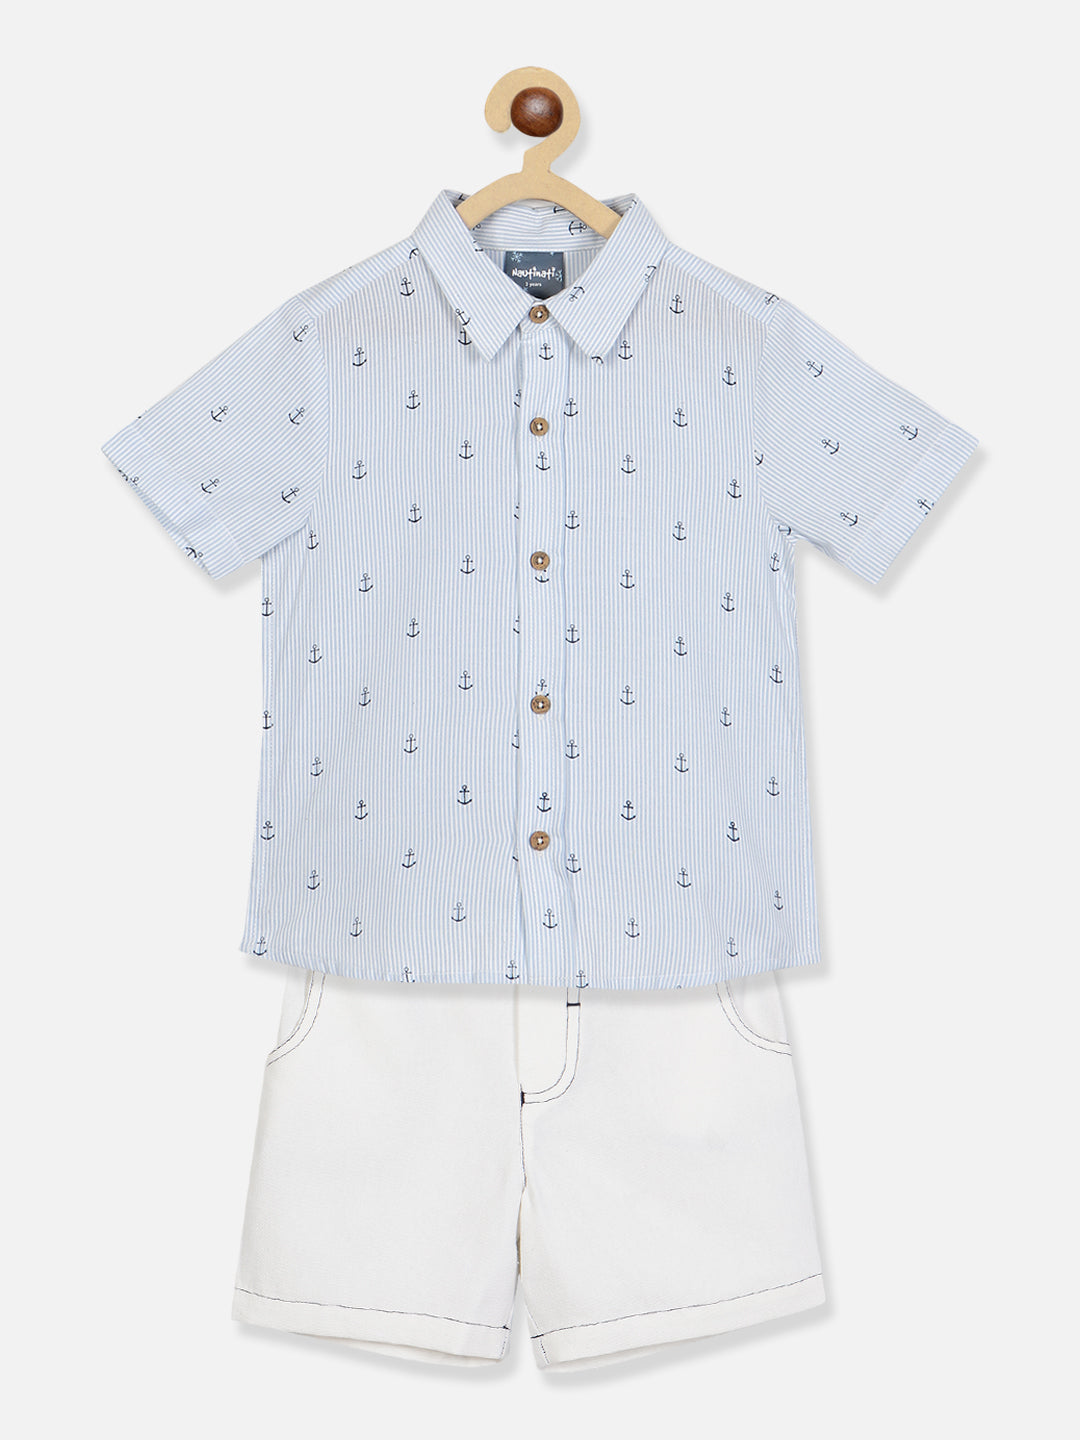 Nautinati Boys Printed Pure Cotton Shirt With Shorts